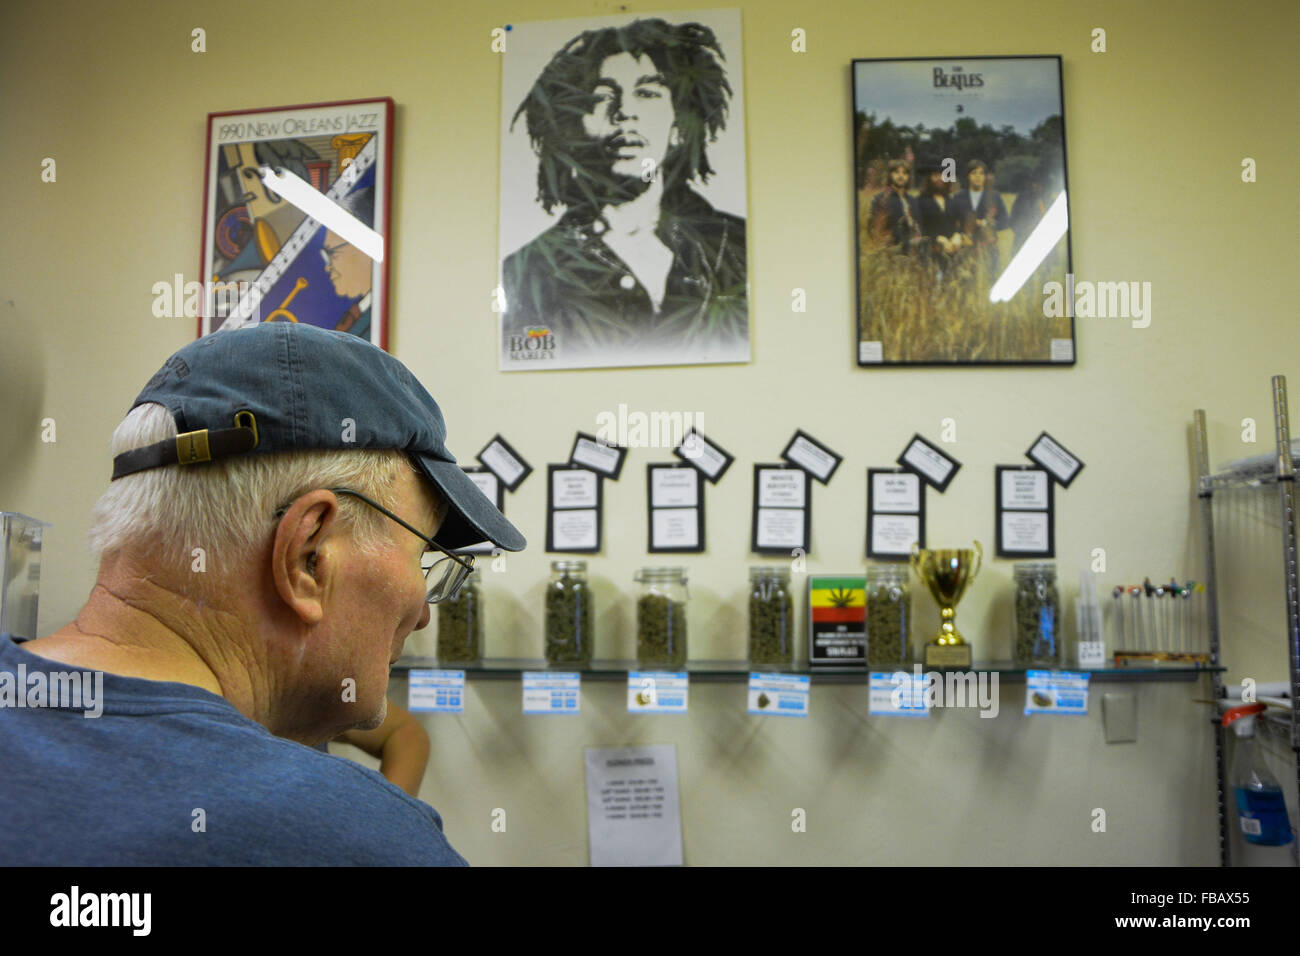 Buying Legal Marijuana in a shop in Mancos Colorado USA Stock Photo